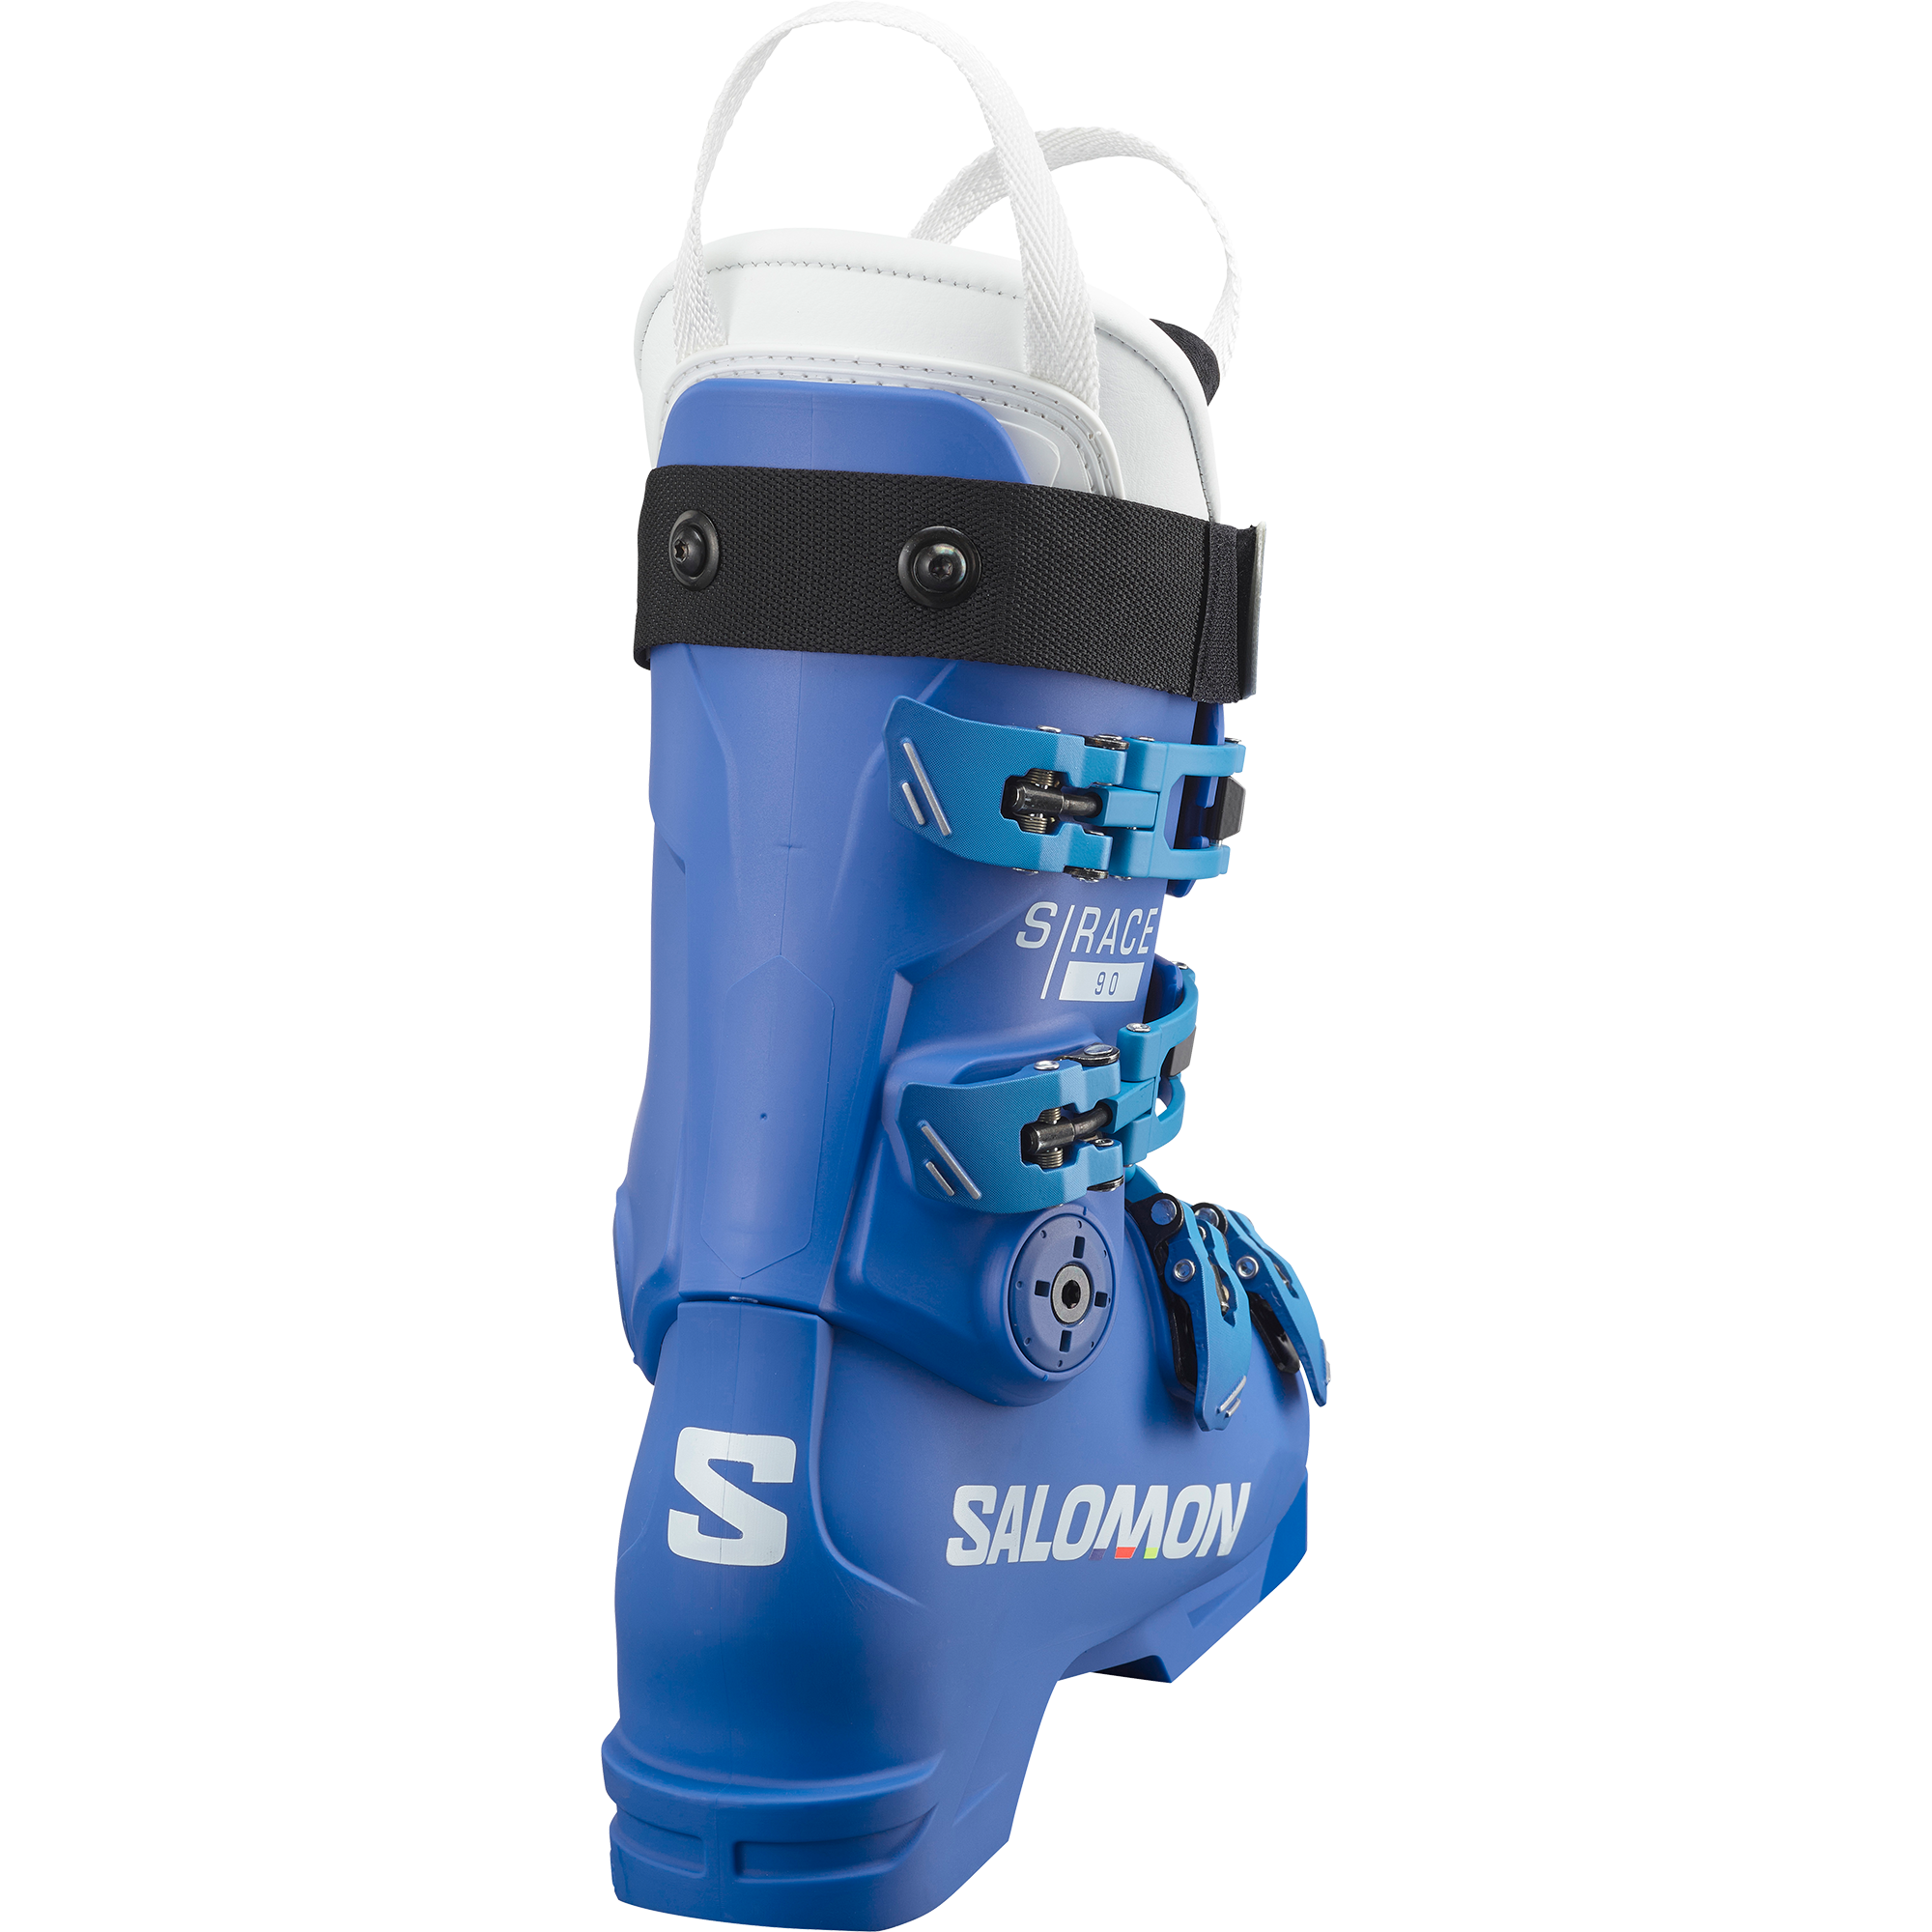 SALOMON サロモン S RACE 90 25.5 未使用 スキー ブーツ - ブーツ(男性用)